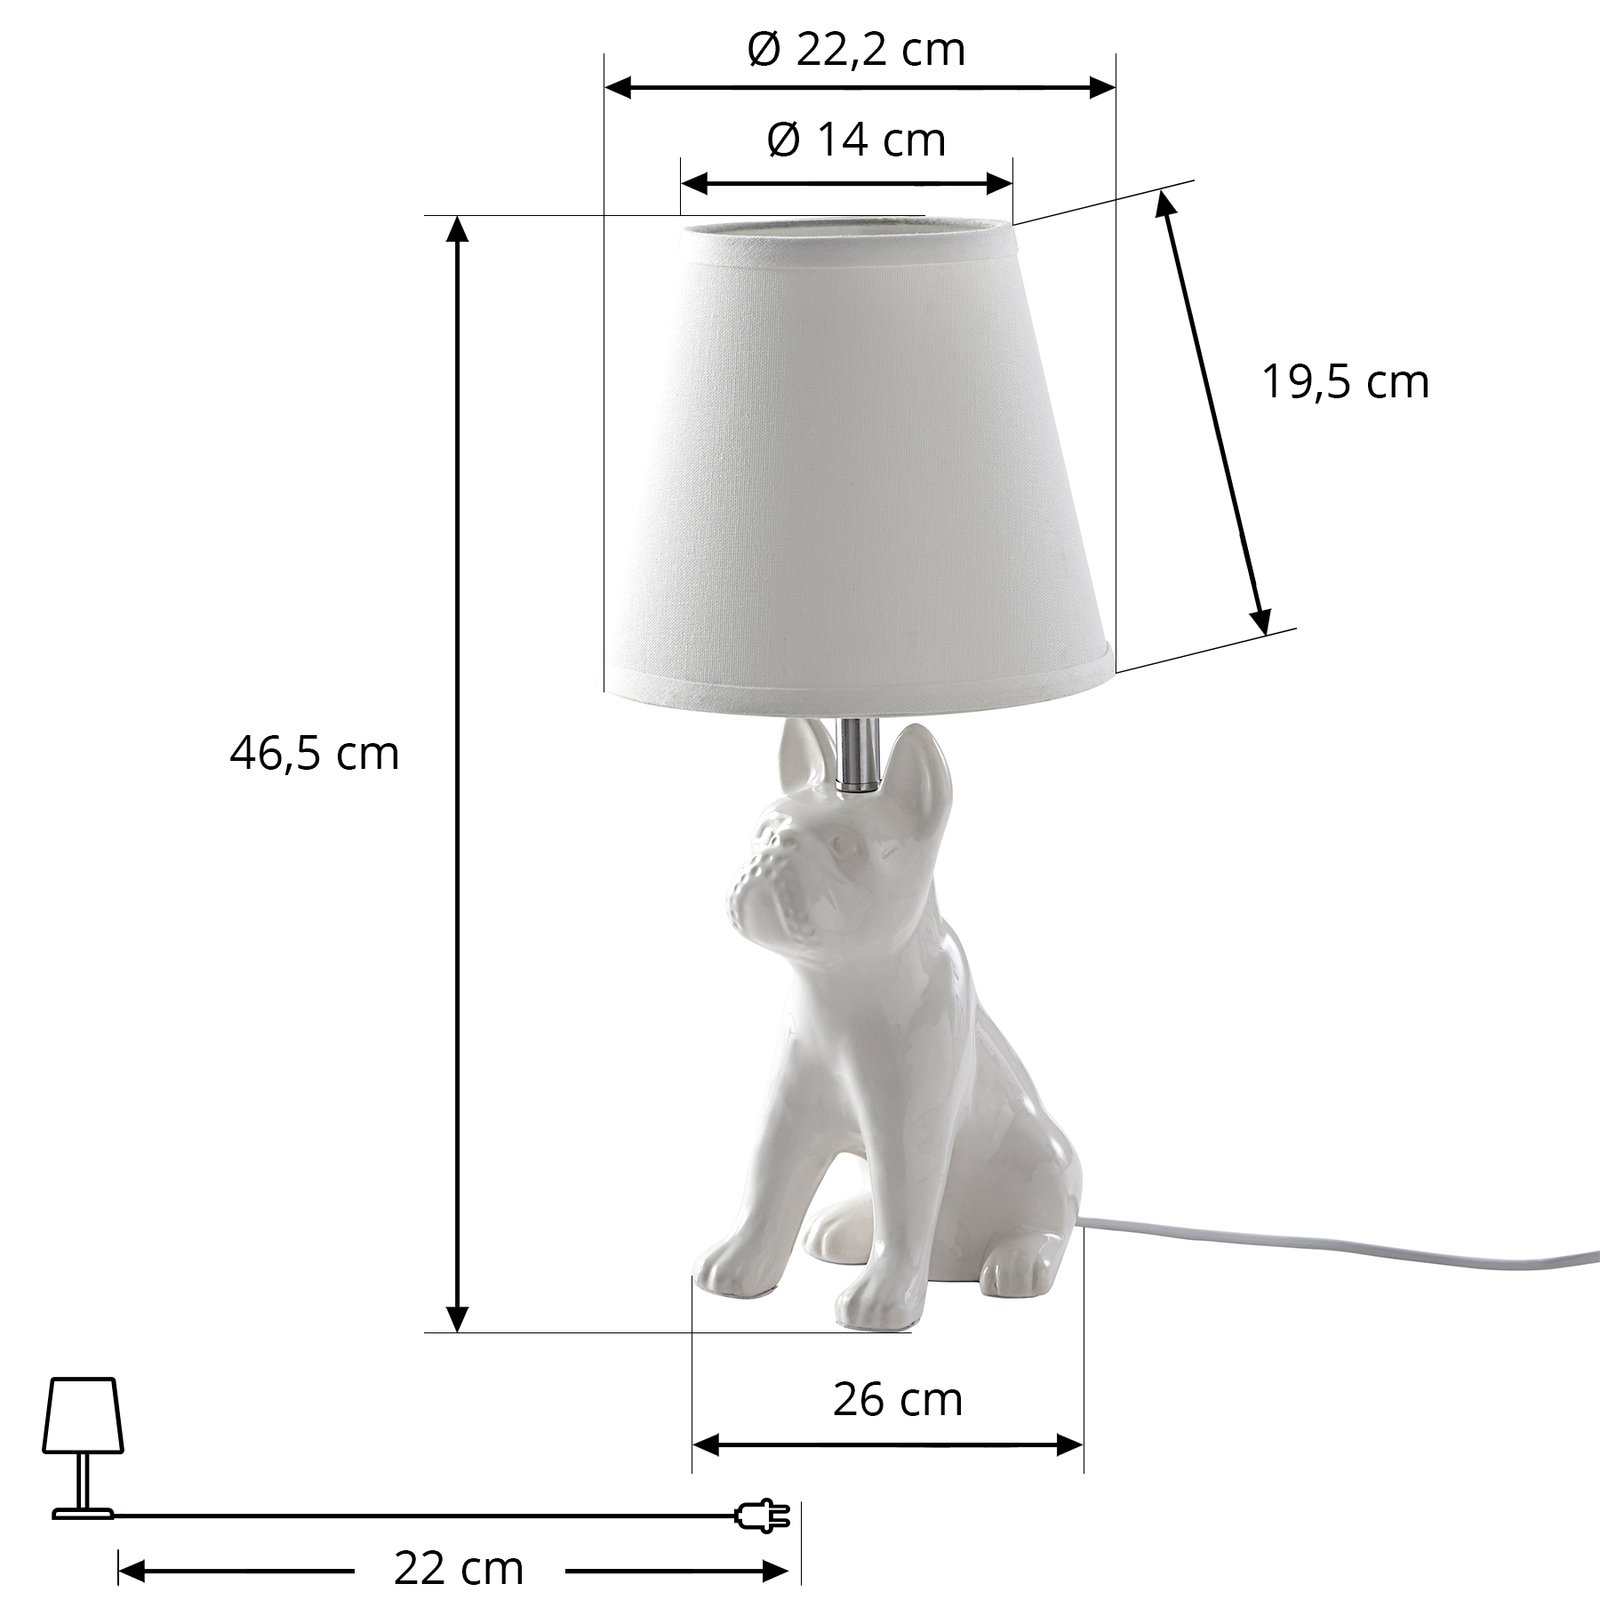 Lindby table lamp Herry, white, ceramic, dog, 46.5 cm high